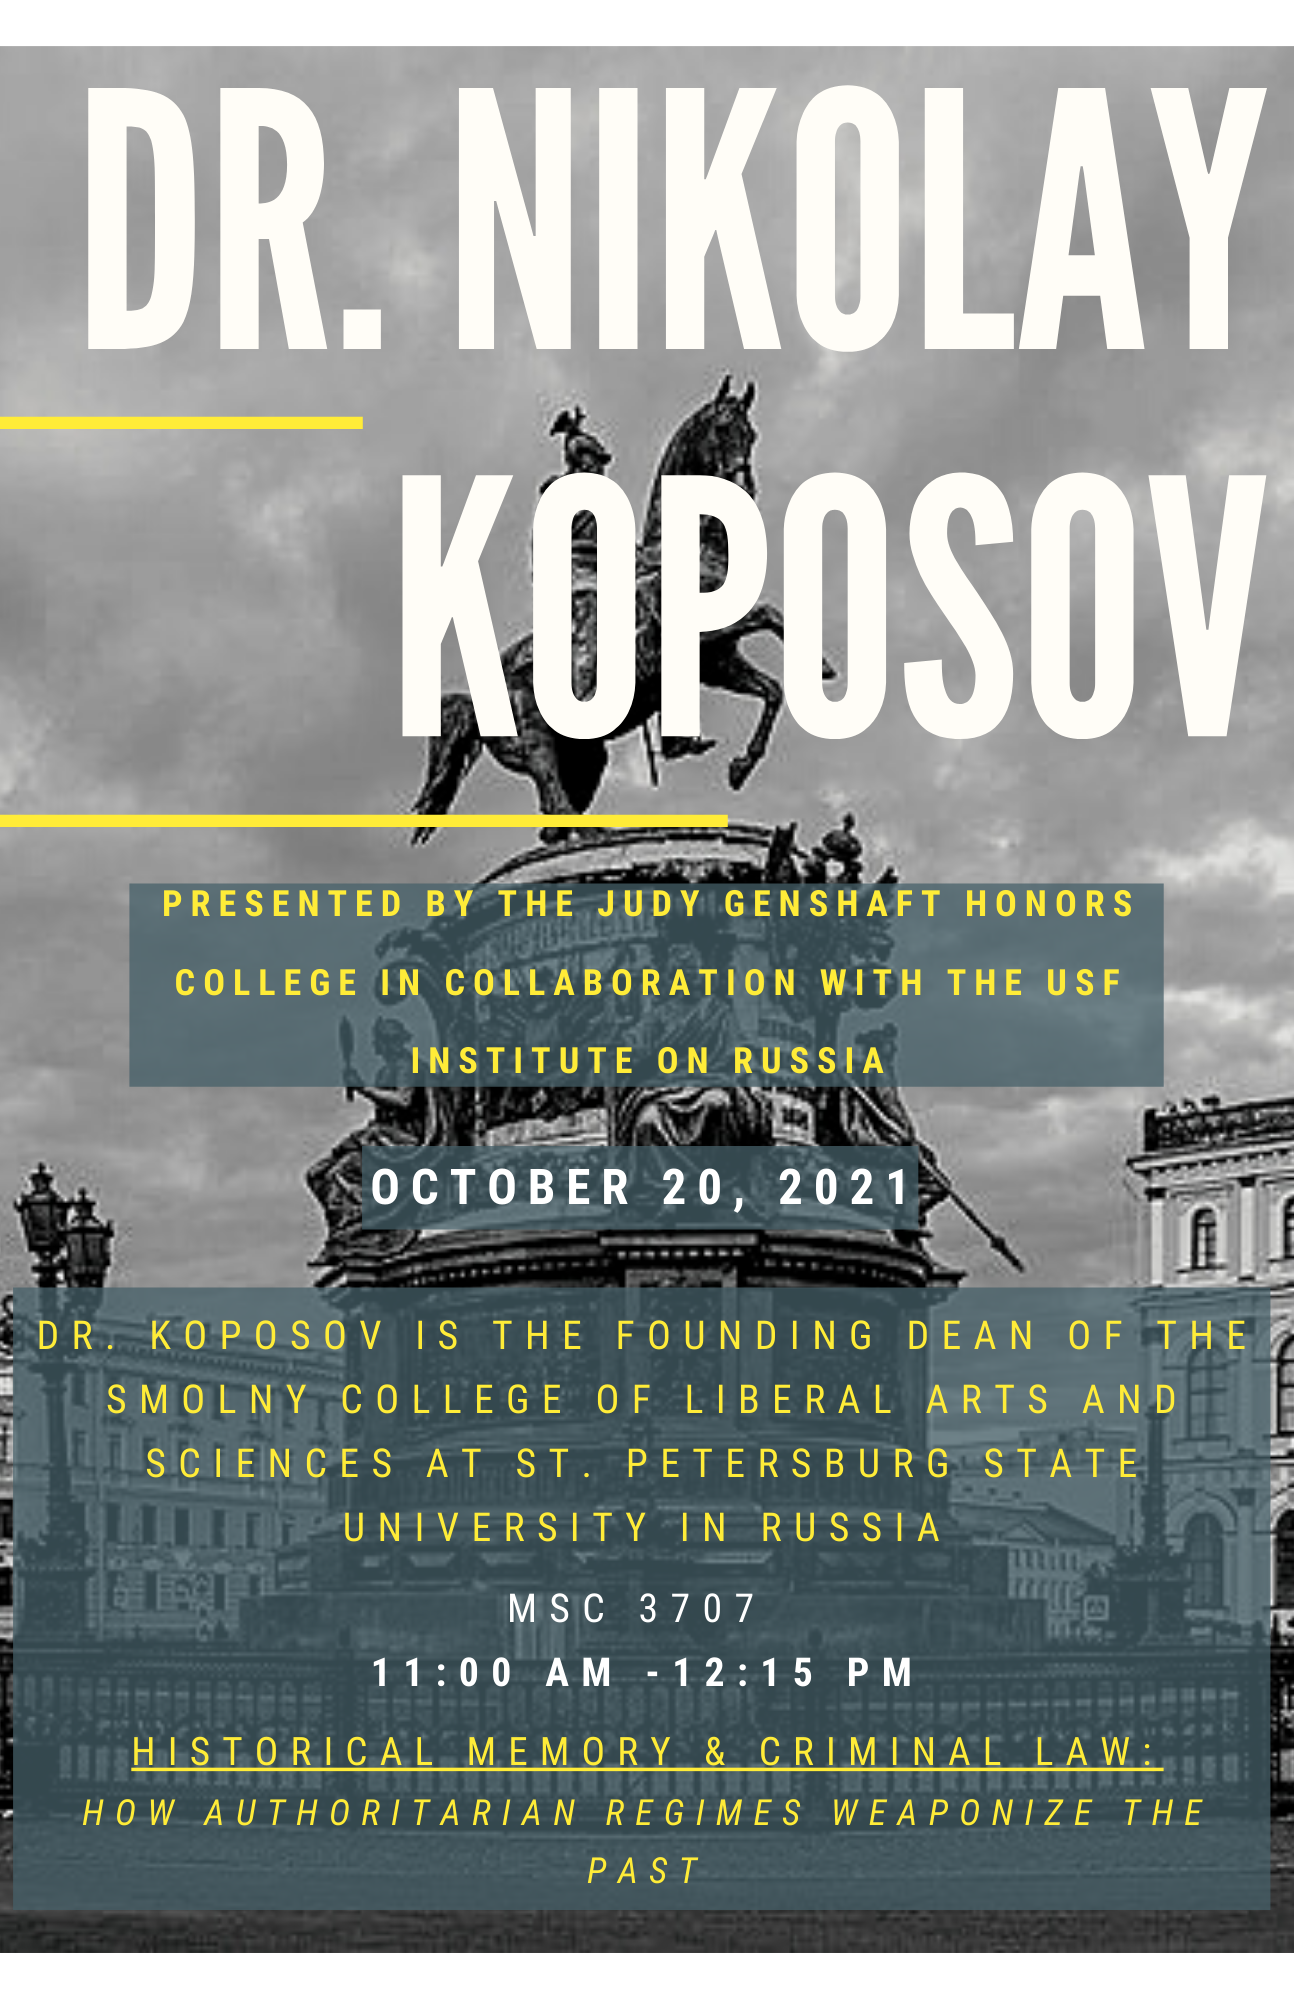 Dr. Nikolay Koposov event flyer